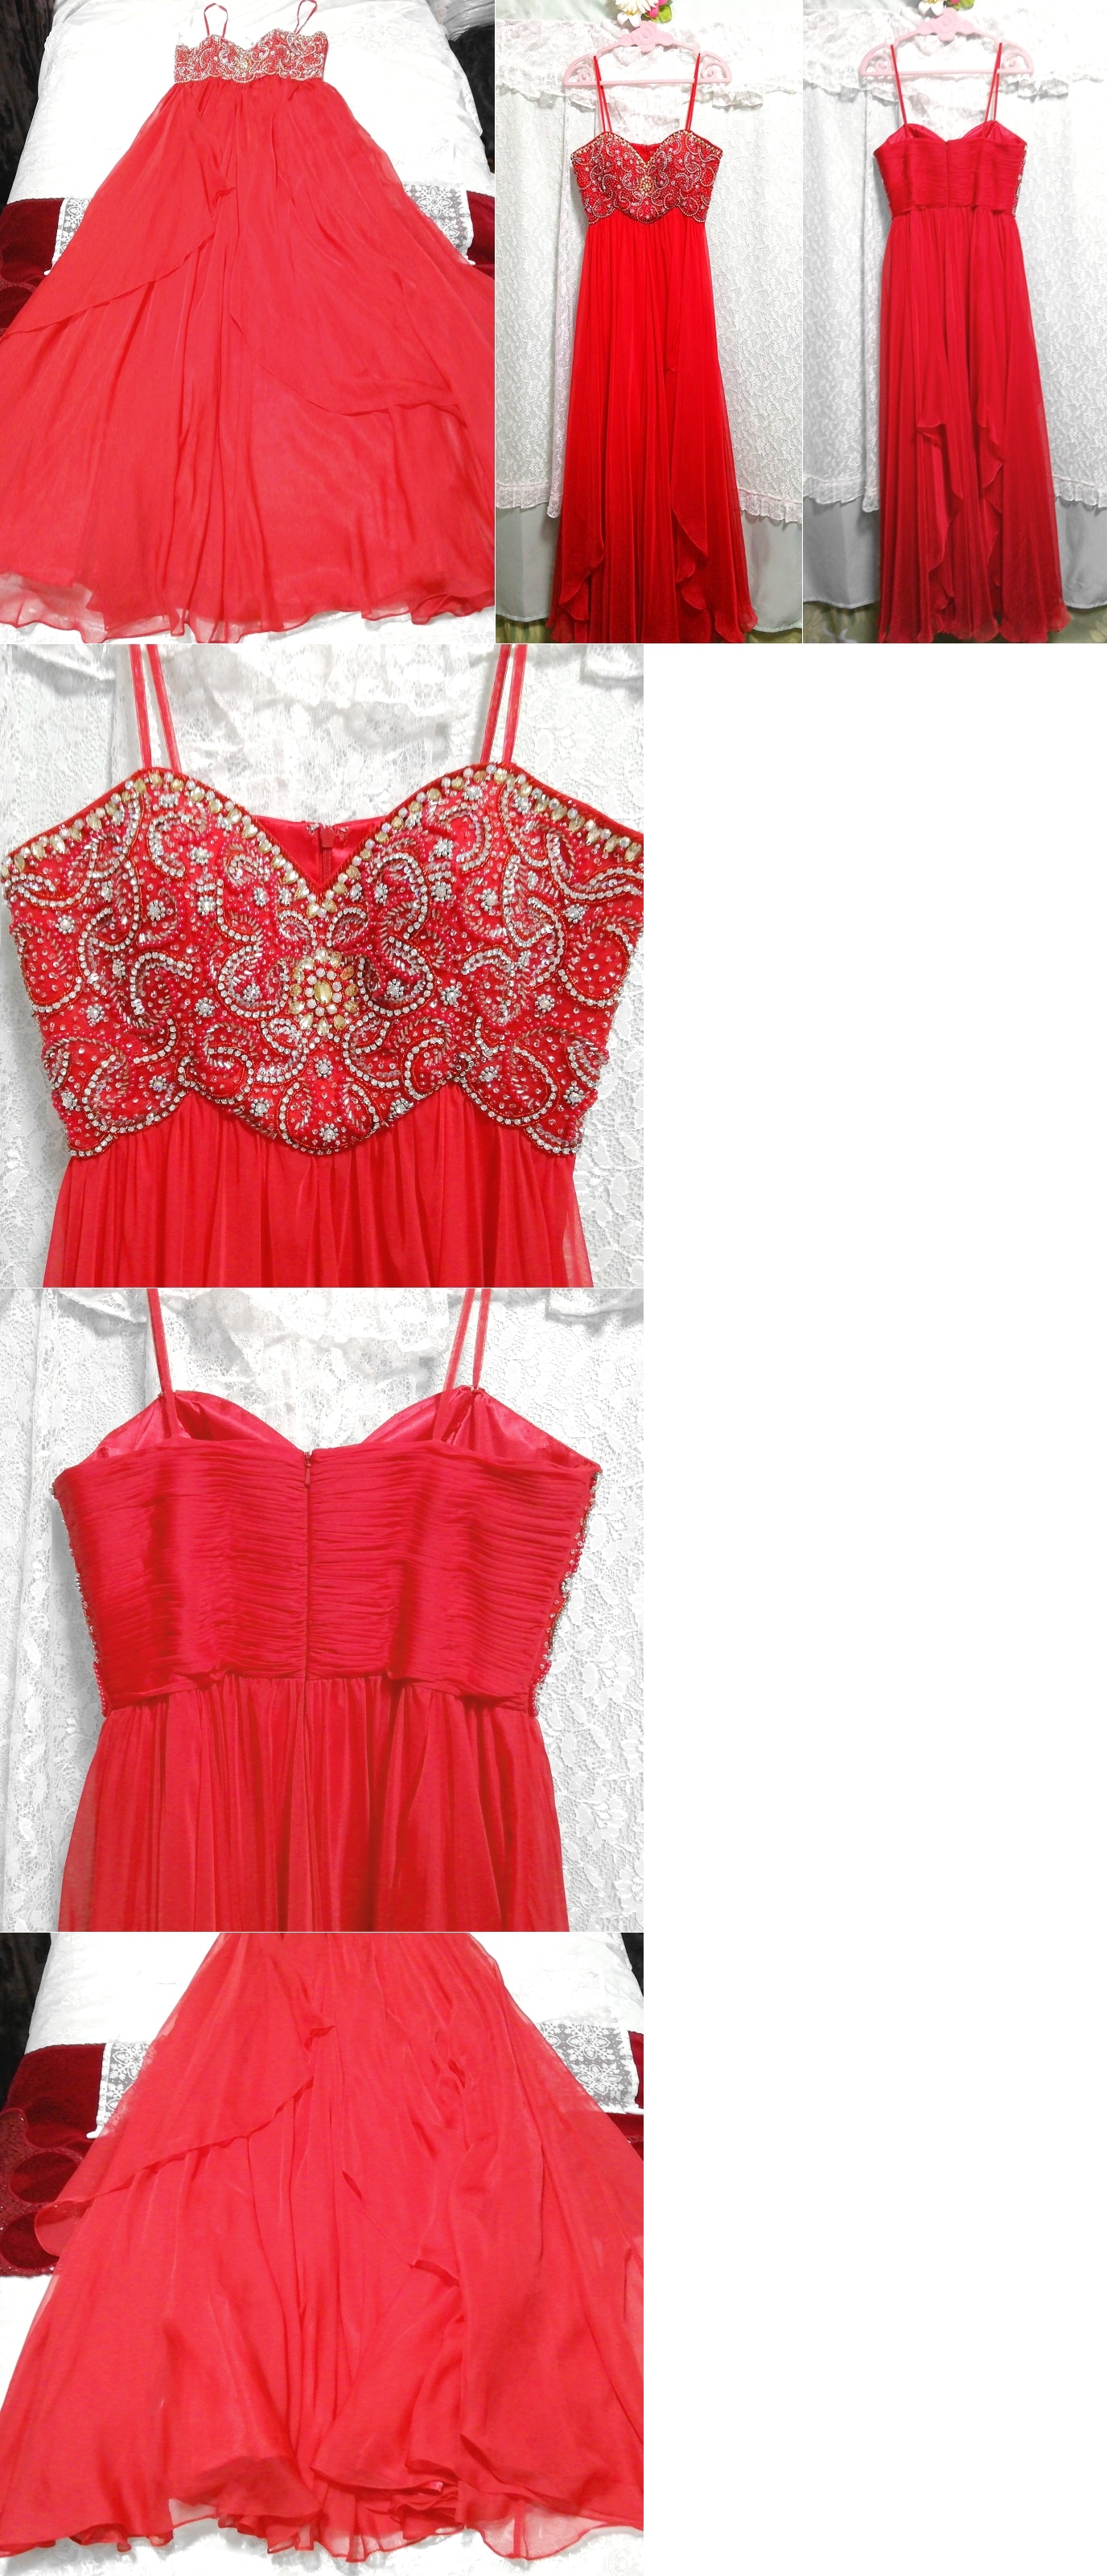 Crimson red luxury chiffon negligee nightgown camisole maxi dress, long skirt, m size